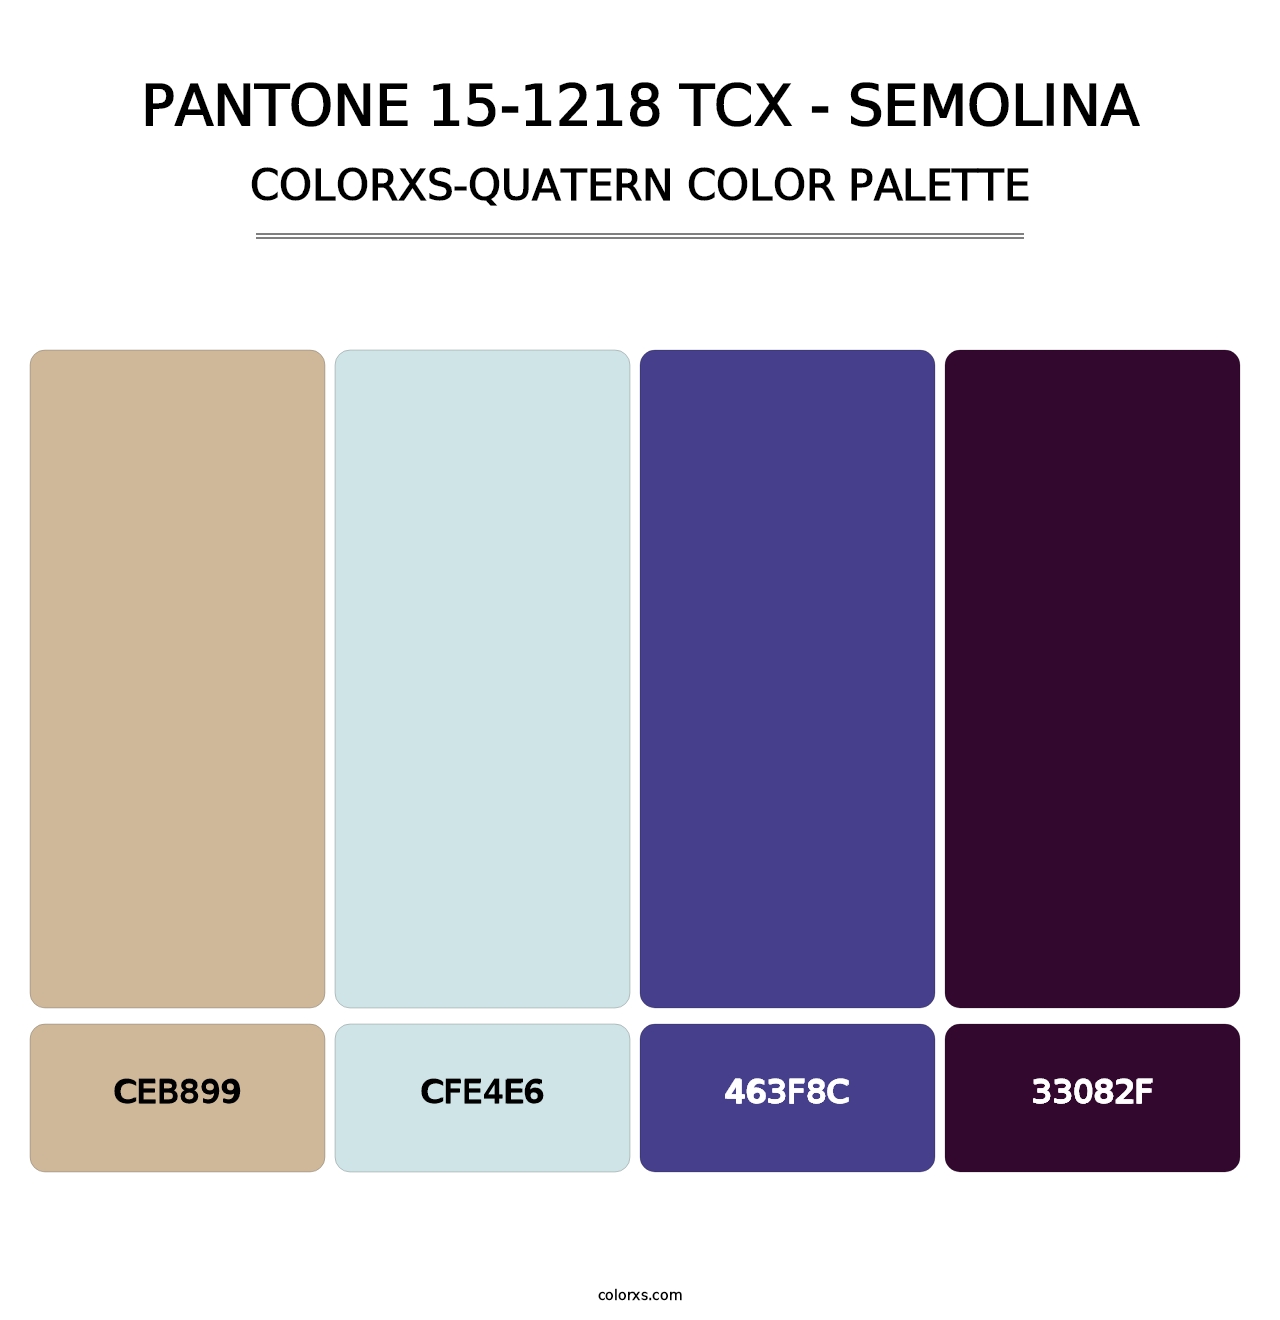 PANTONE 15-1218 TCX - Semolina - Colorxs Quatern Palette